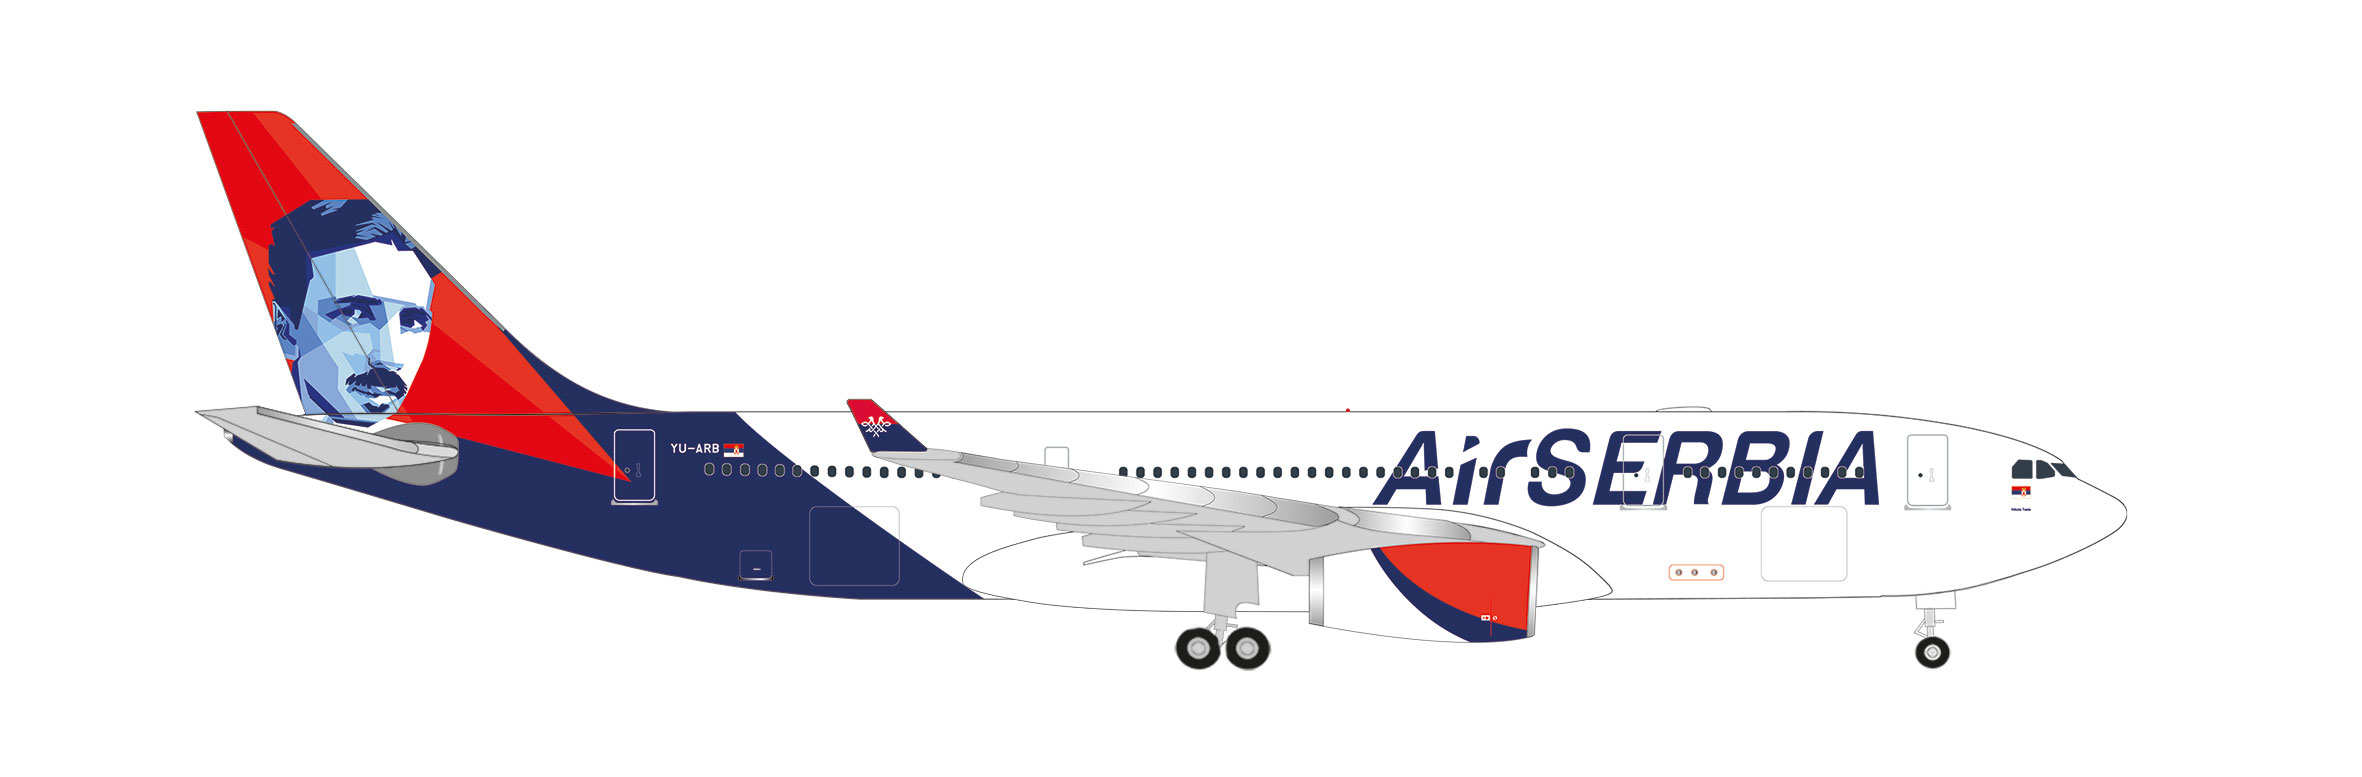 Air Serbia Airbus A330-200 –“Nikola Tesla” Reg.:  YU-ARB